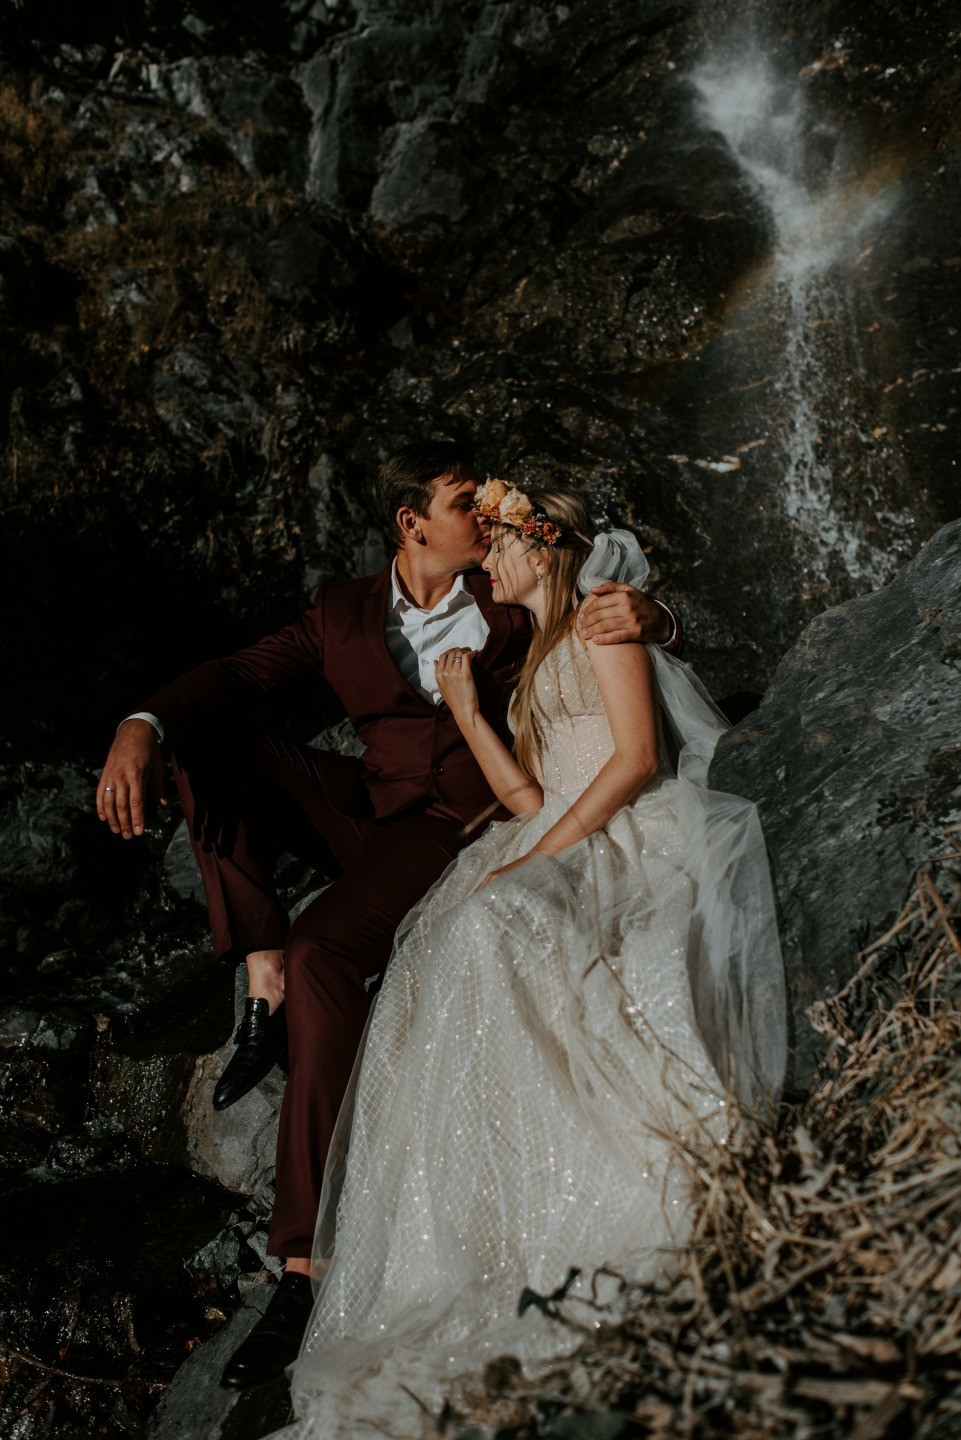 Love-story у Баритового водопада в цветах осени